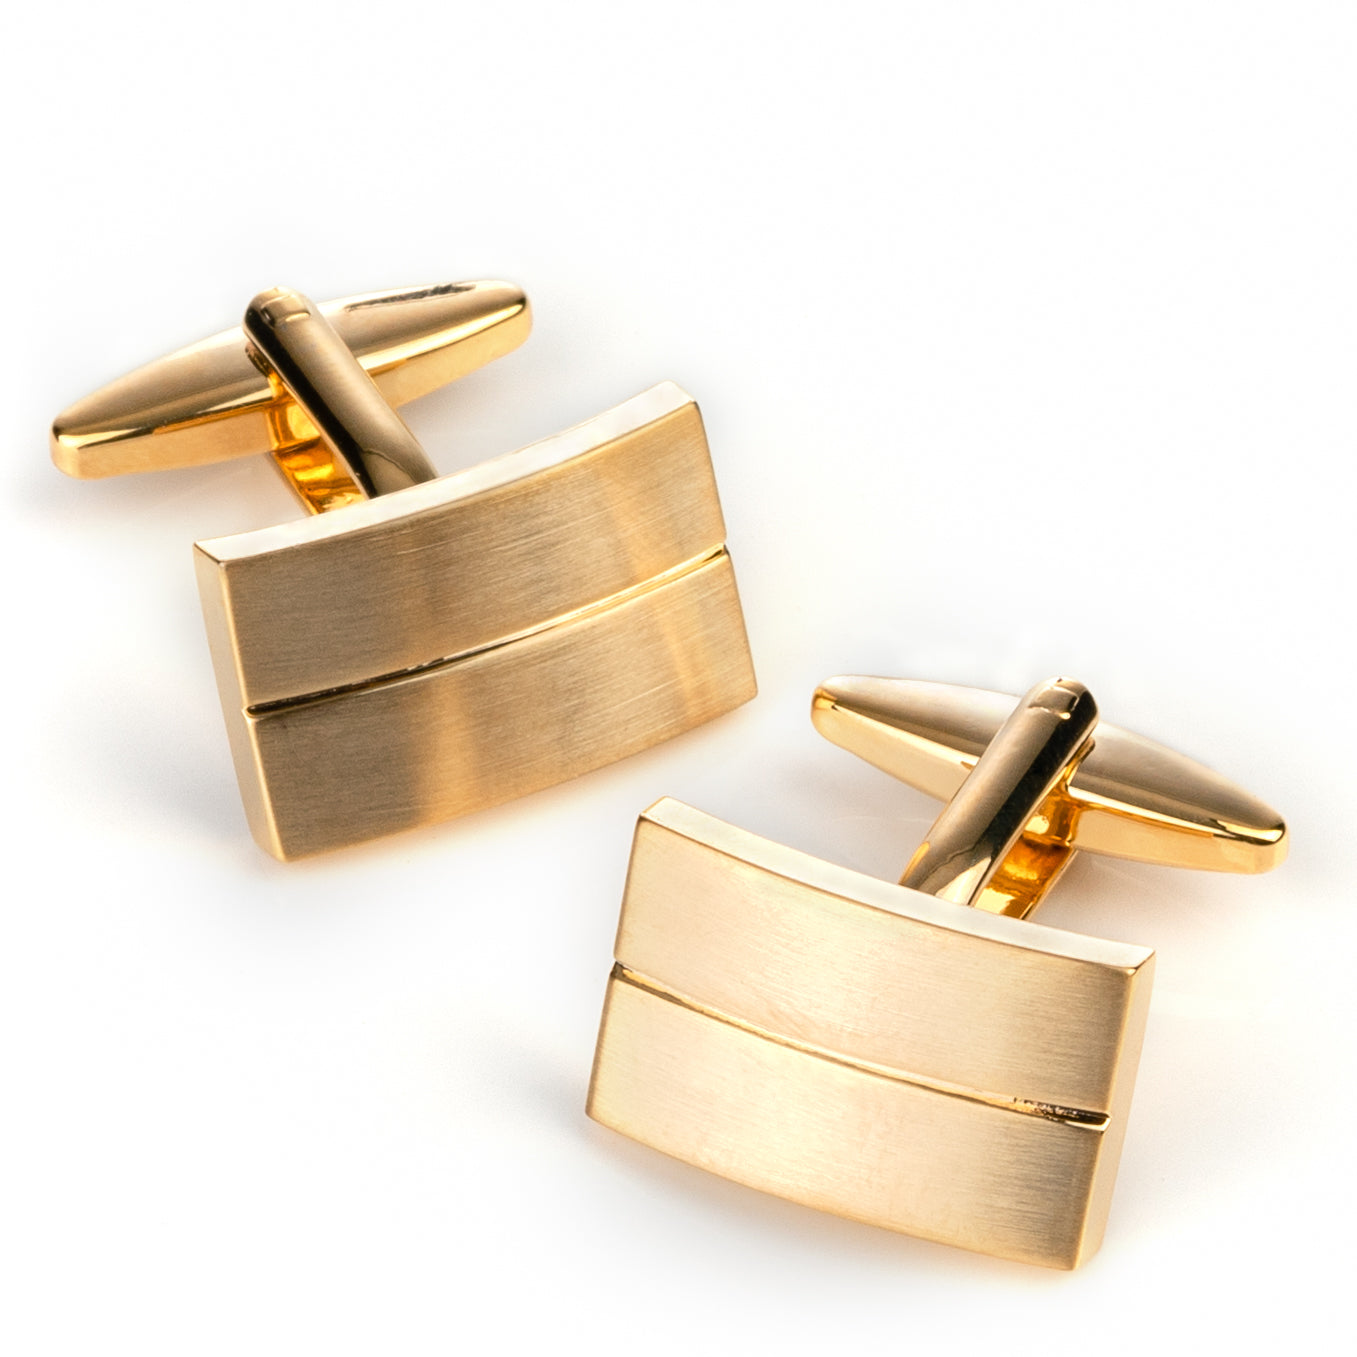 Classic Gold - Single Line Cufflinks, Classic & Modern Cufflinks, CL1305, Mens Cufflinks, Cufflinks, Cuffed, Clinks, Clinks Australia